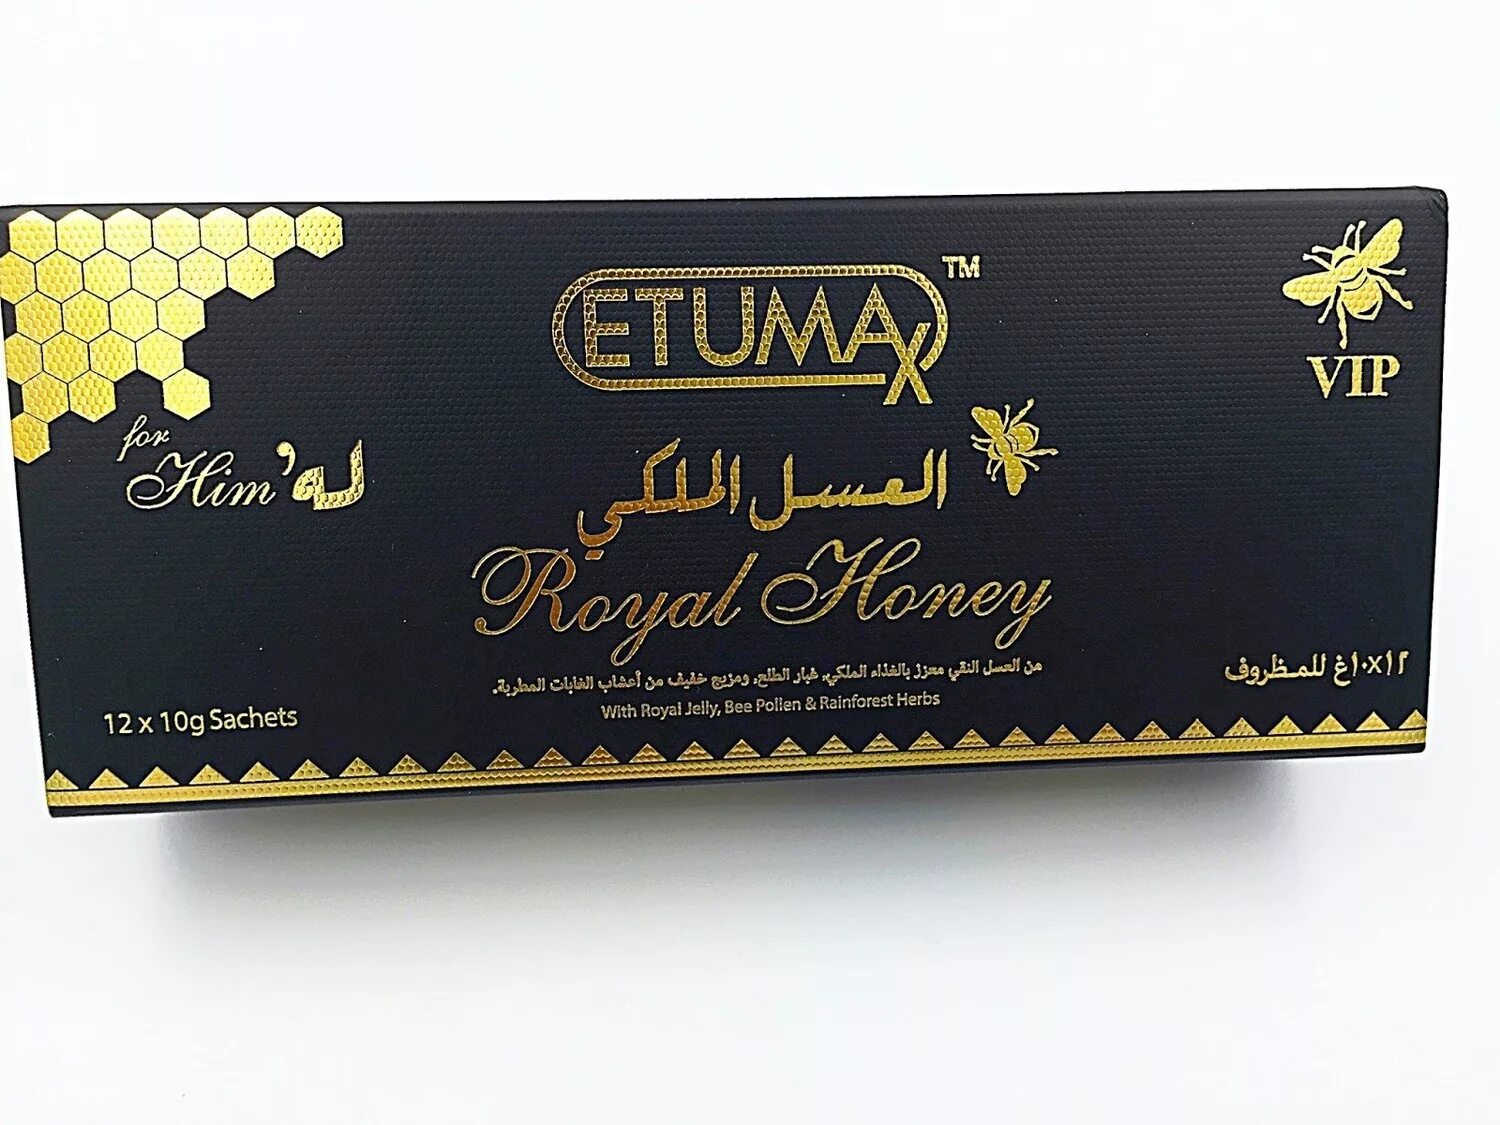 Королевский мед Royal Honey Etumax. Etumax Royal Honey для мужчин. VIP Etumax Royal Honey. Etumax Royal Honey золотые.